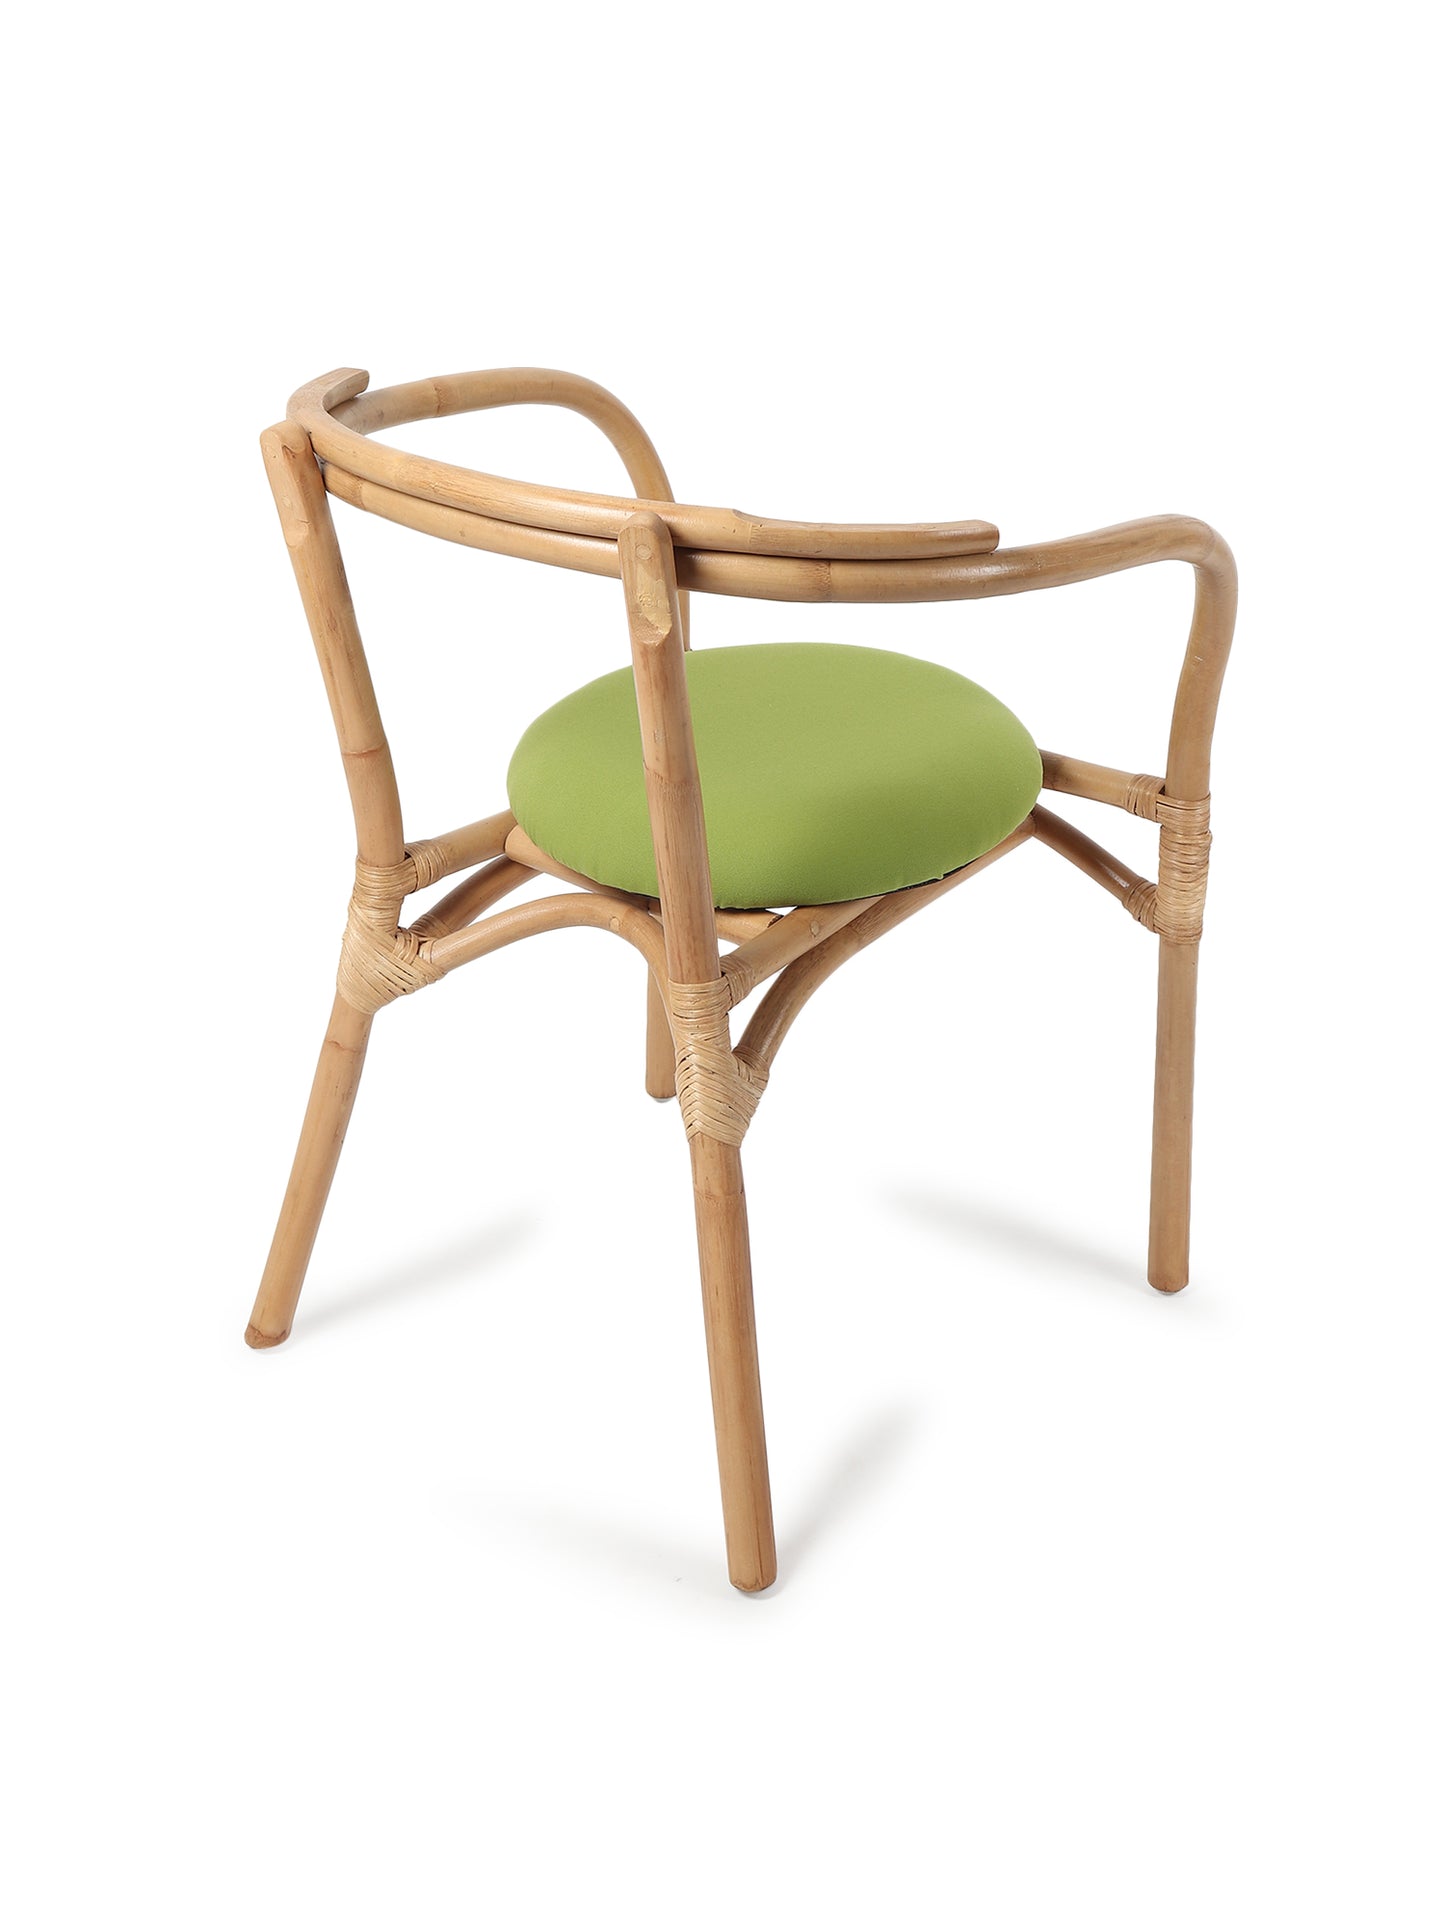 Bamboo Chair,